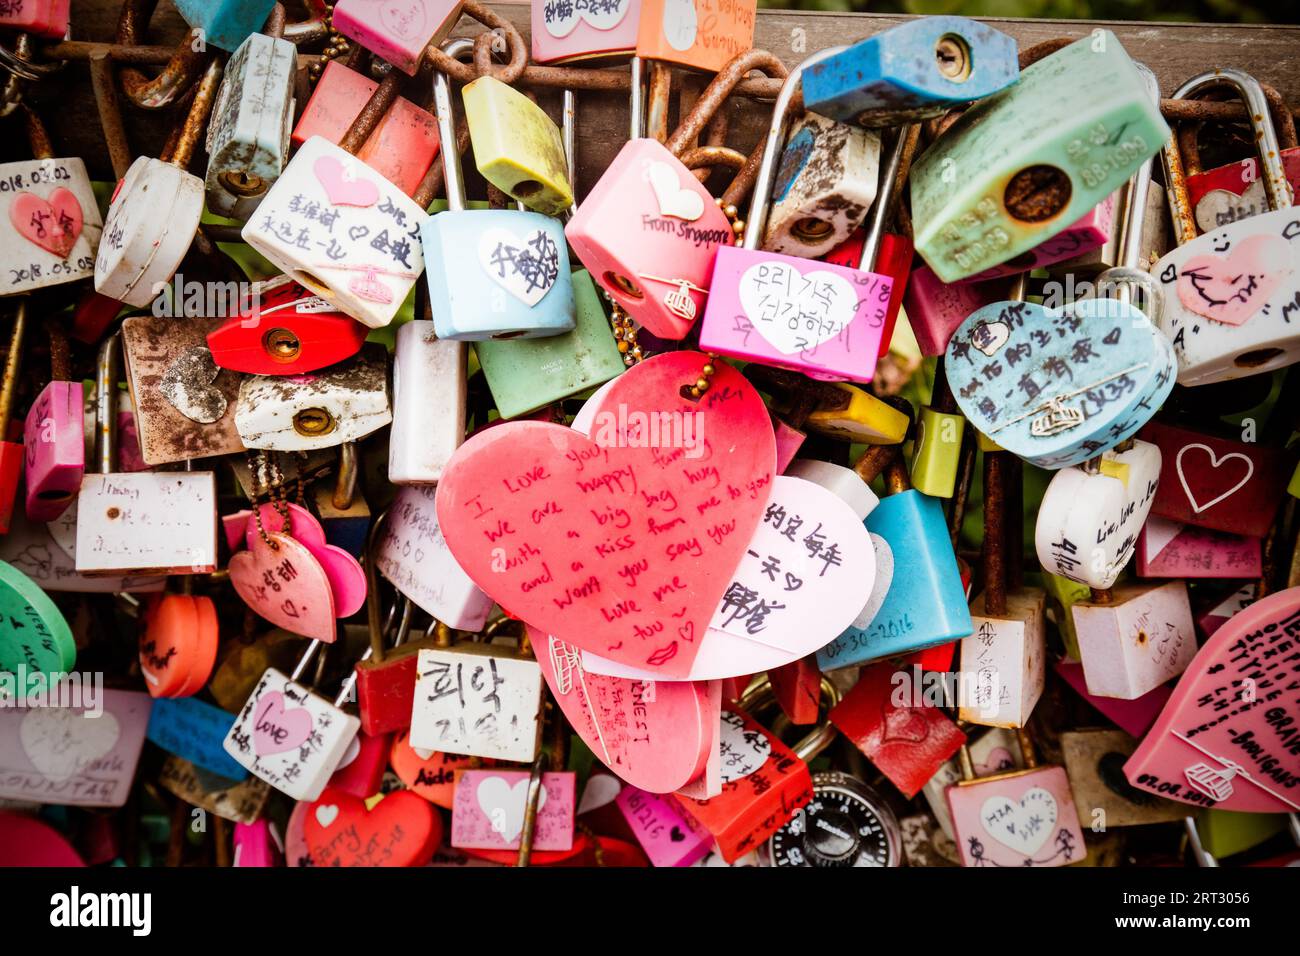 SEOUL, SOUTH KOREA, AUGUST 25, 2018: Thousands of Love locks at N Seoul Tower, Namsan Park. South Korea Stock Photo